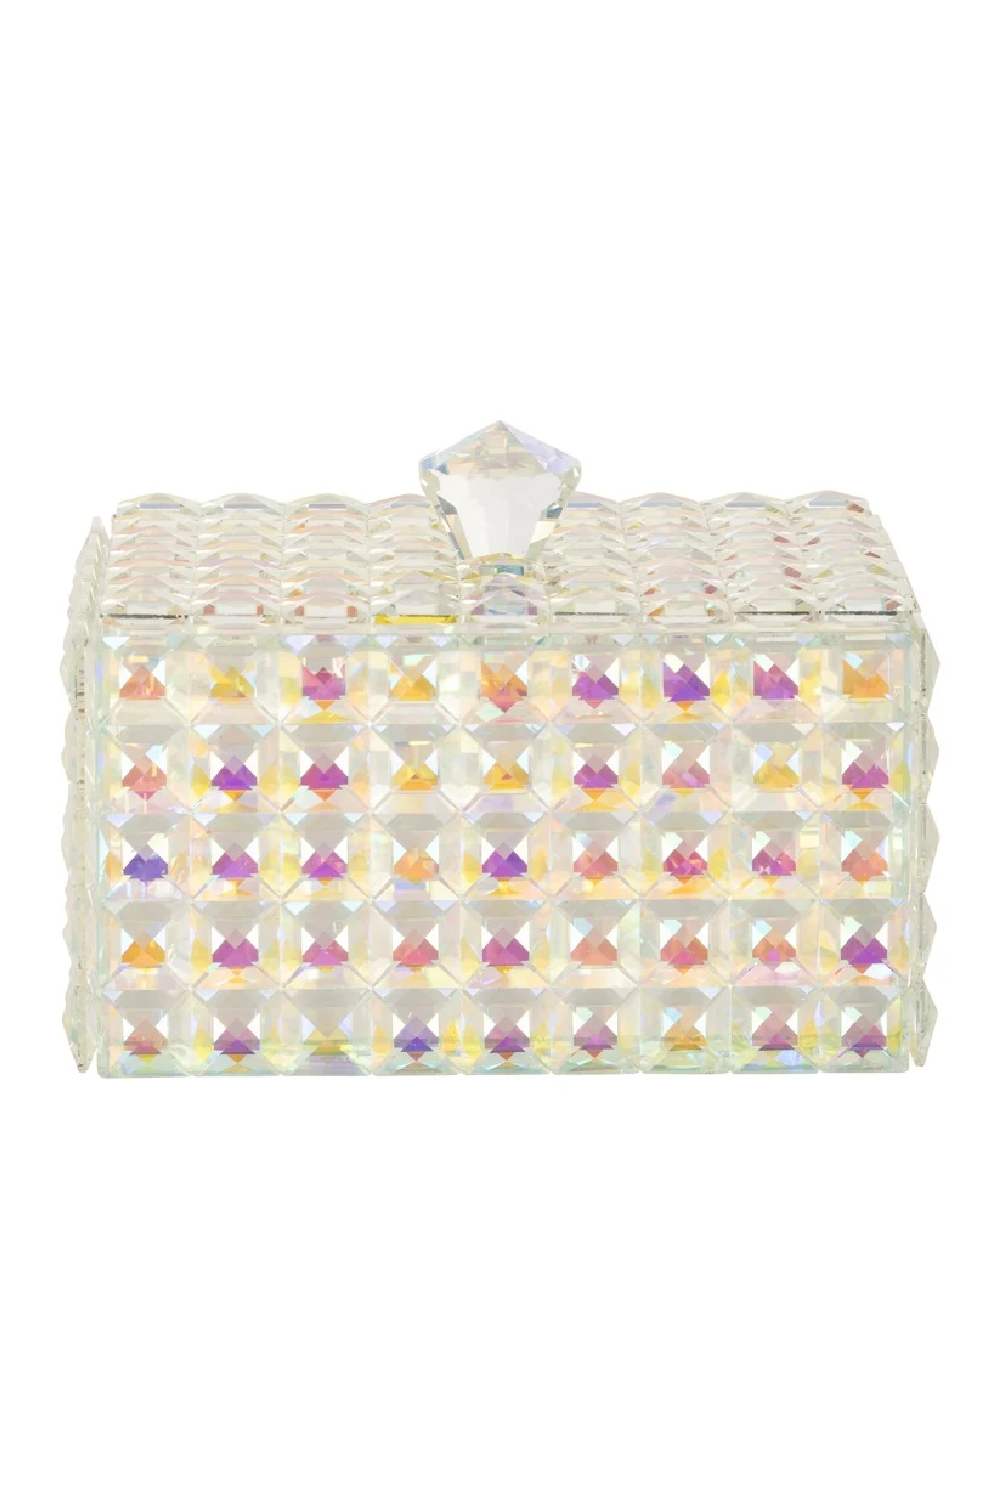 Faceted Crystal Jewelry Box | OROA Rainbow | Oroa.com